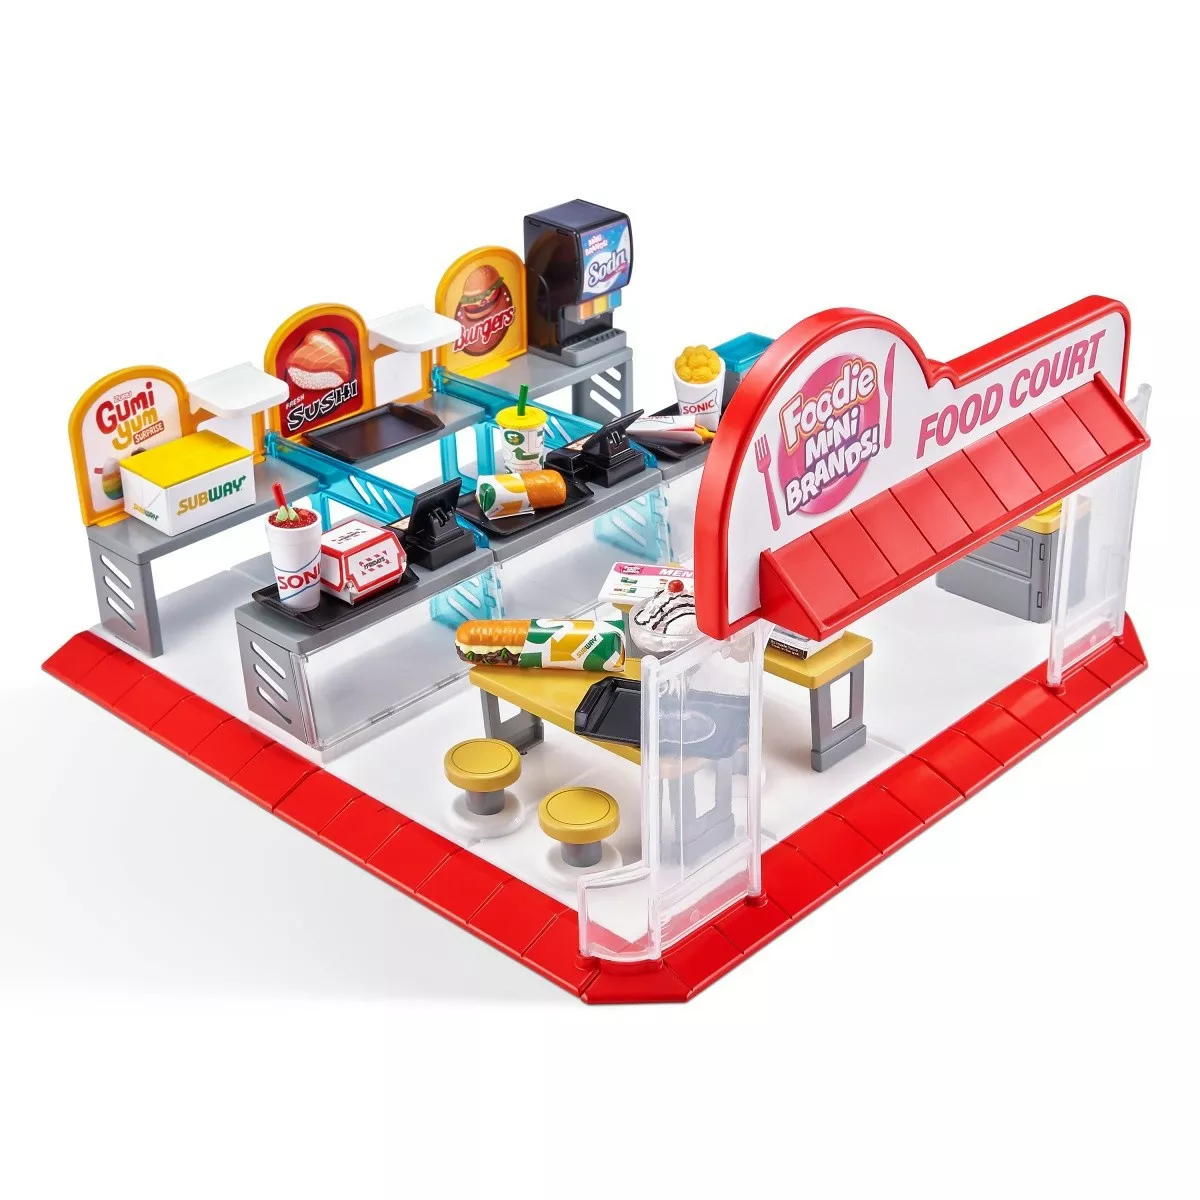 5 Surprise Zestaw z figurkami Mini Brands Mini Food Court